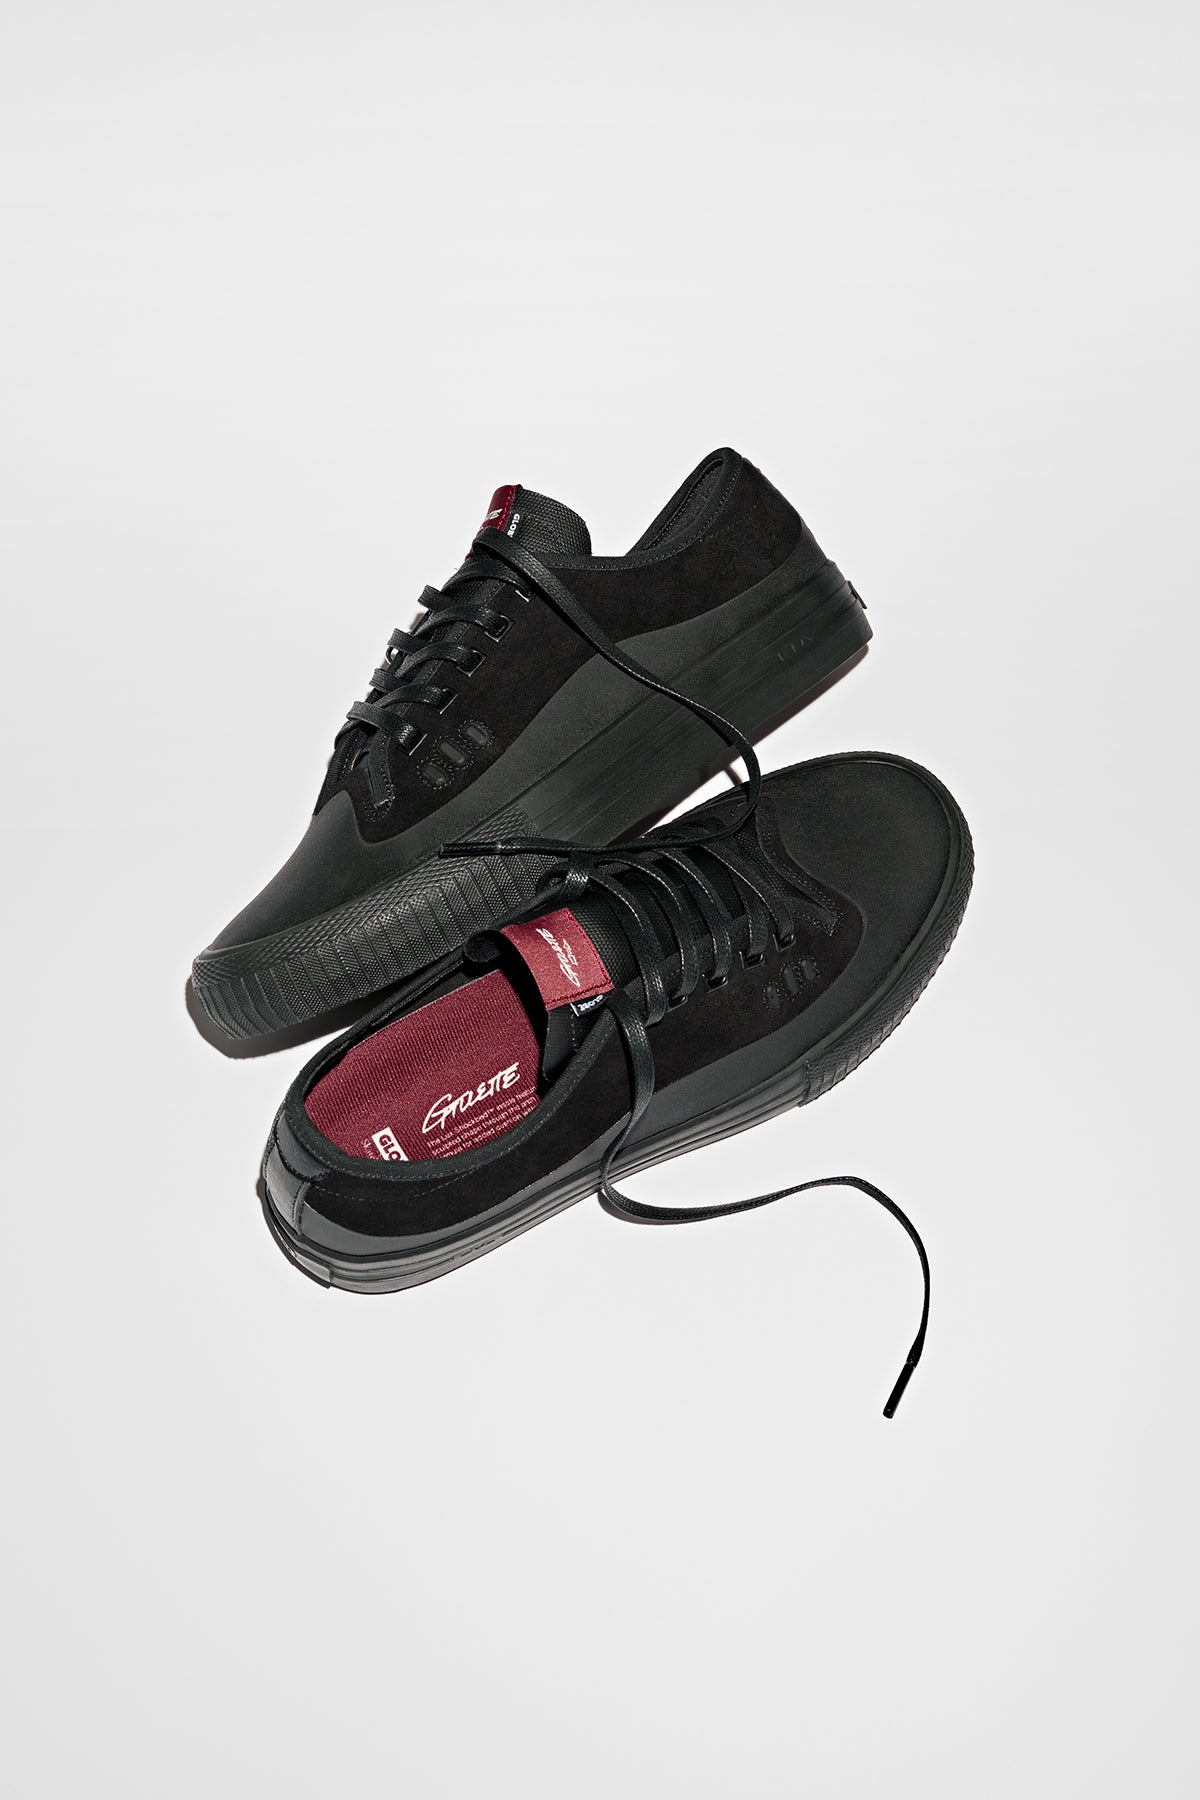 Globe - Gillette - Black/Black Camurça - skateboard Sapatos